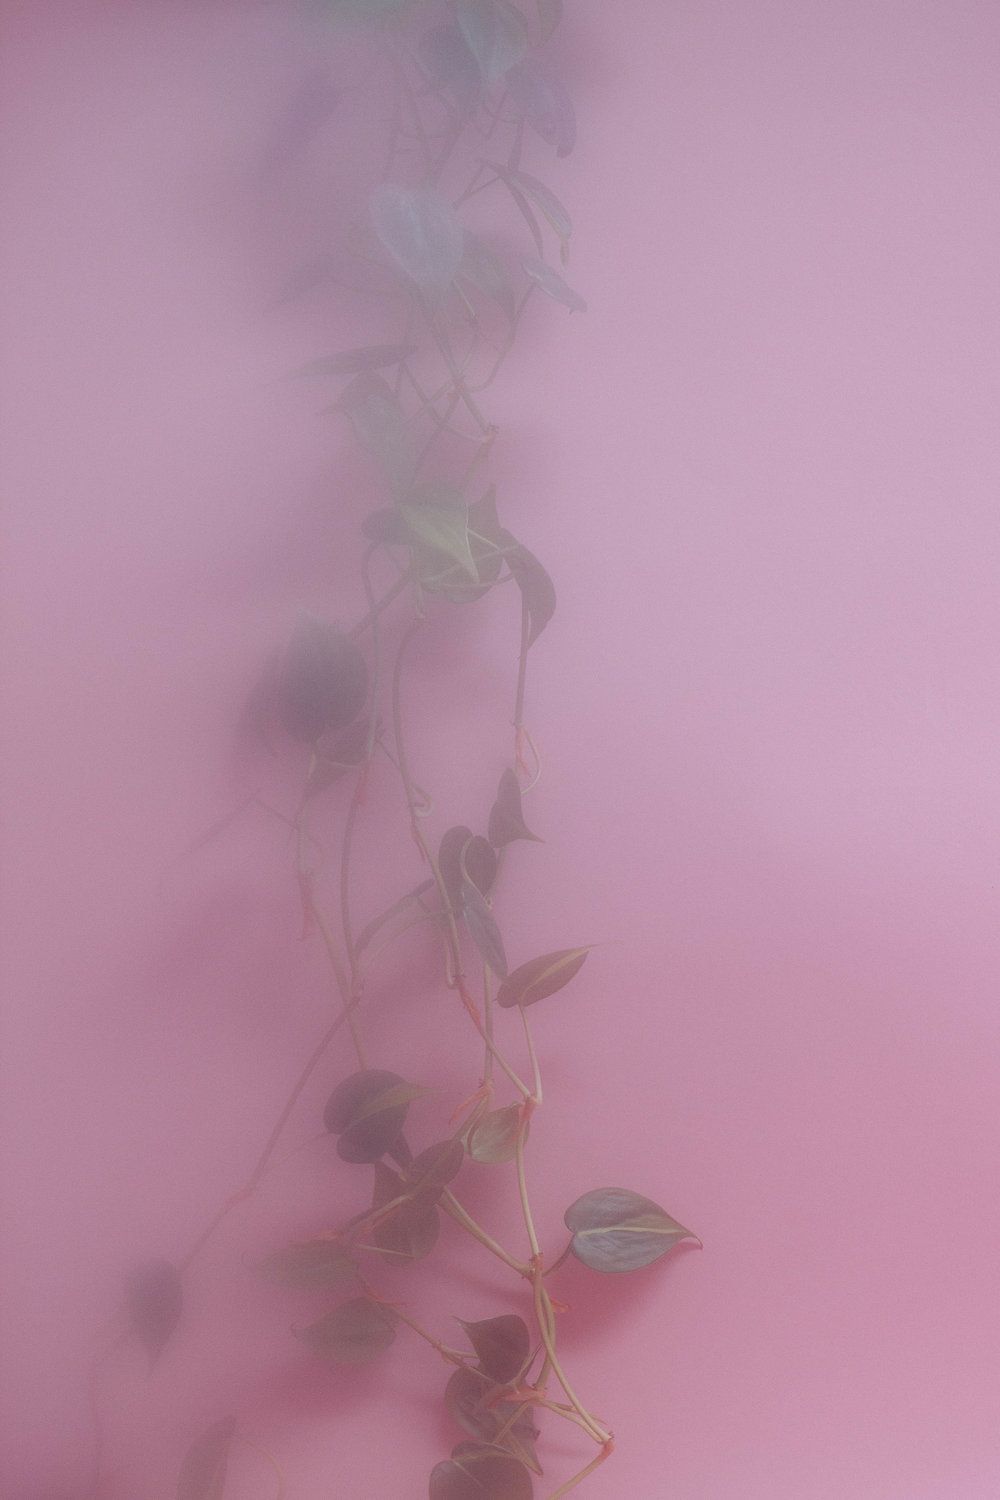 Plants on pink